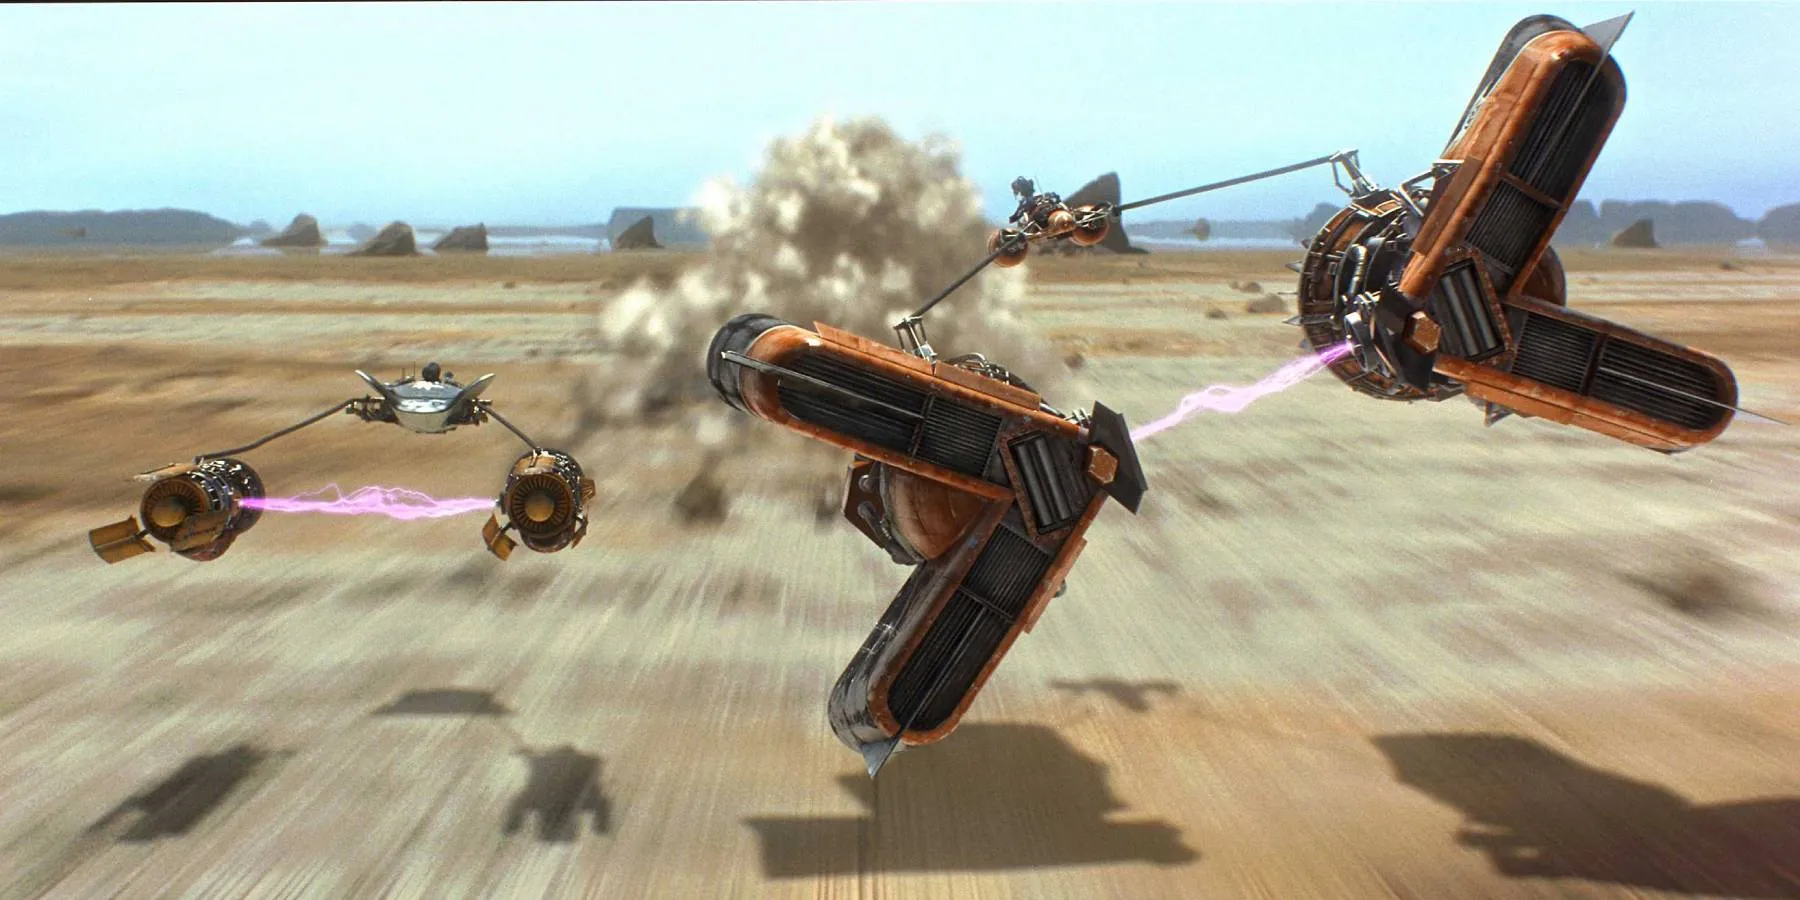 Anakin Skywalker and Sebulba racing in their podracers in Star Wars: Episode I: The Phantom Menace